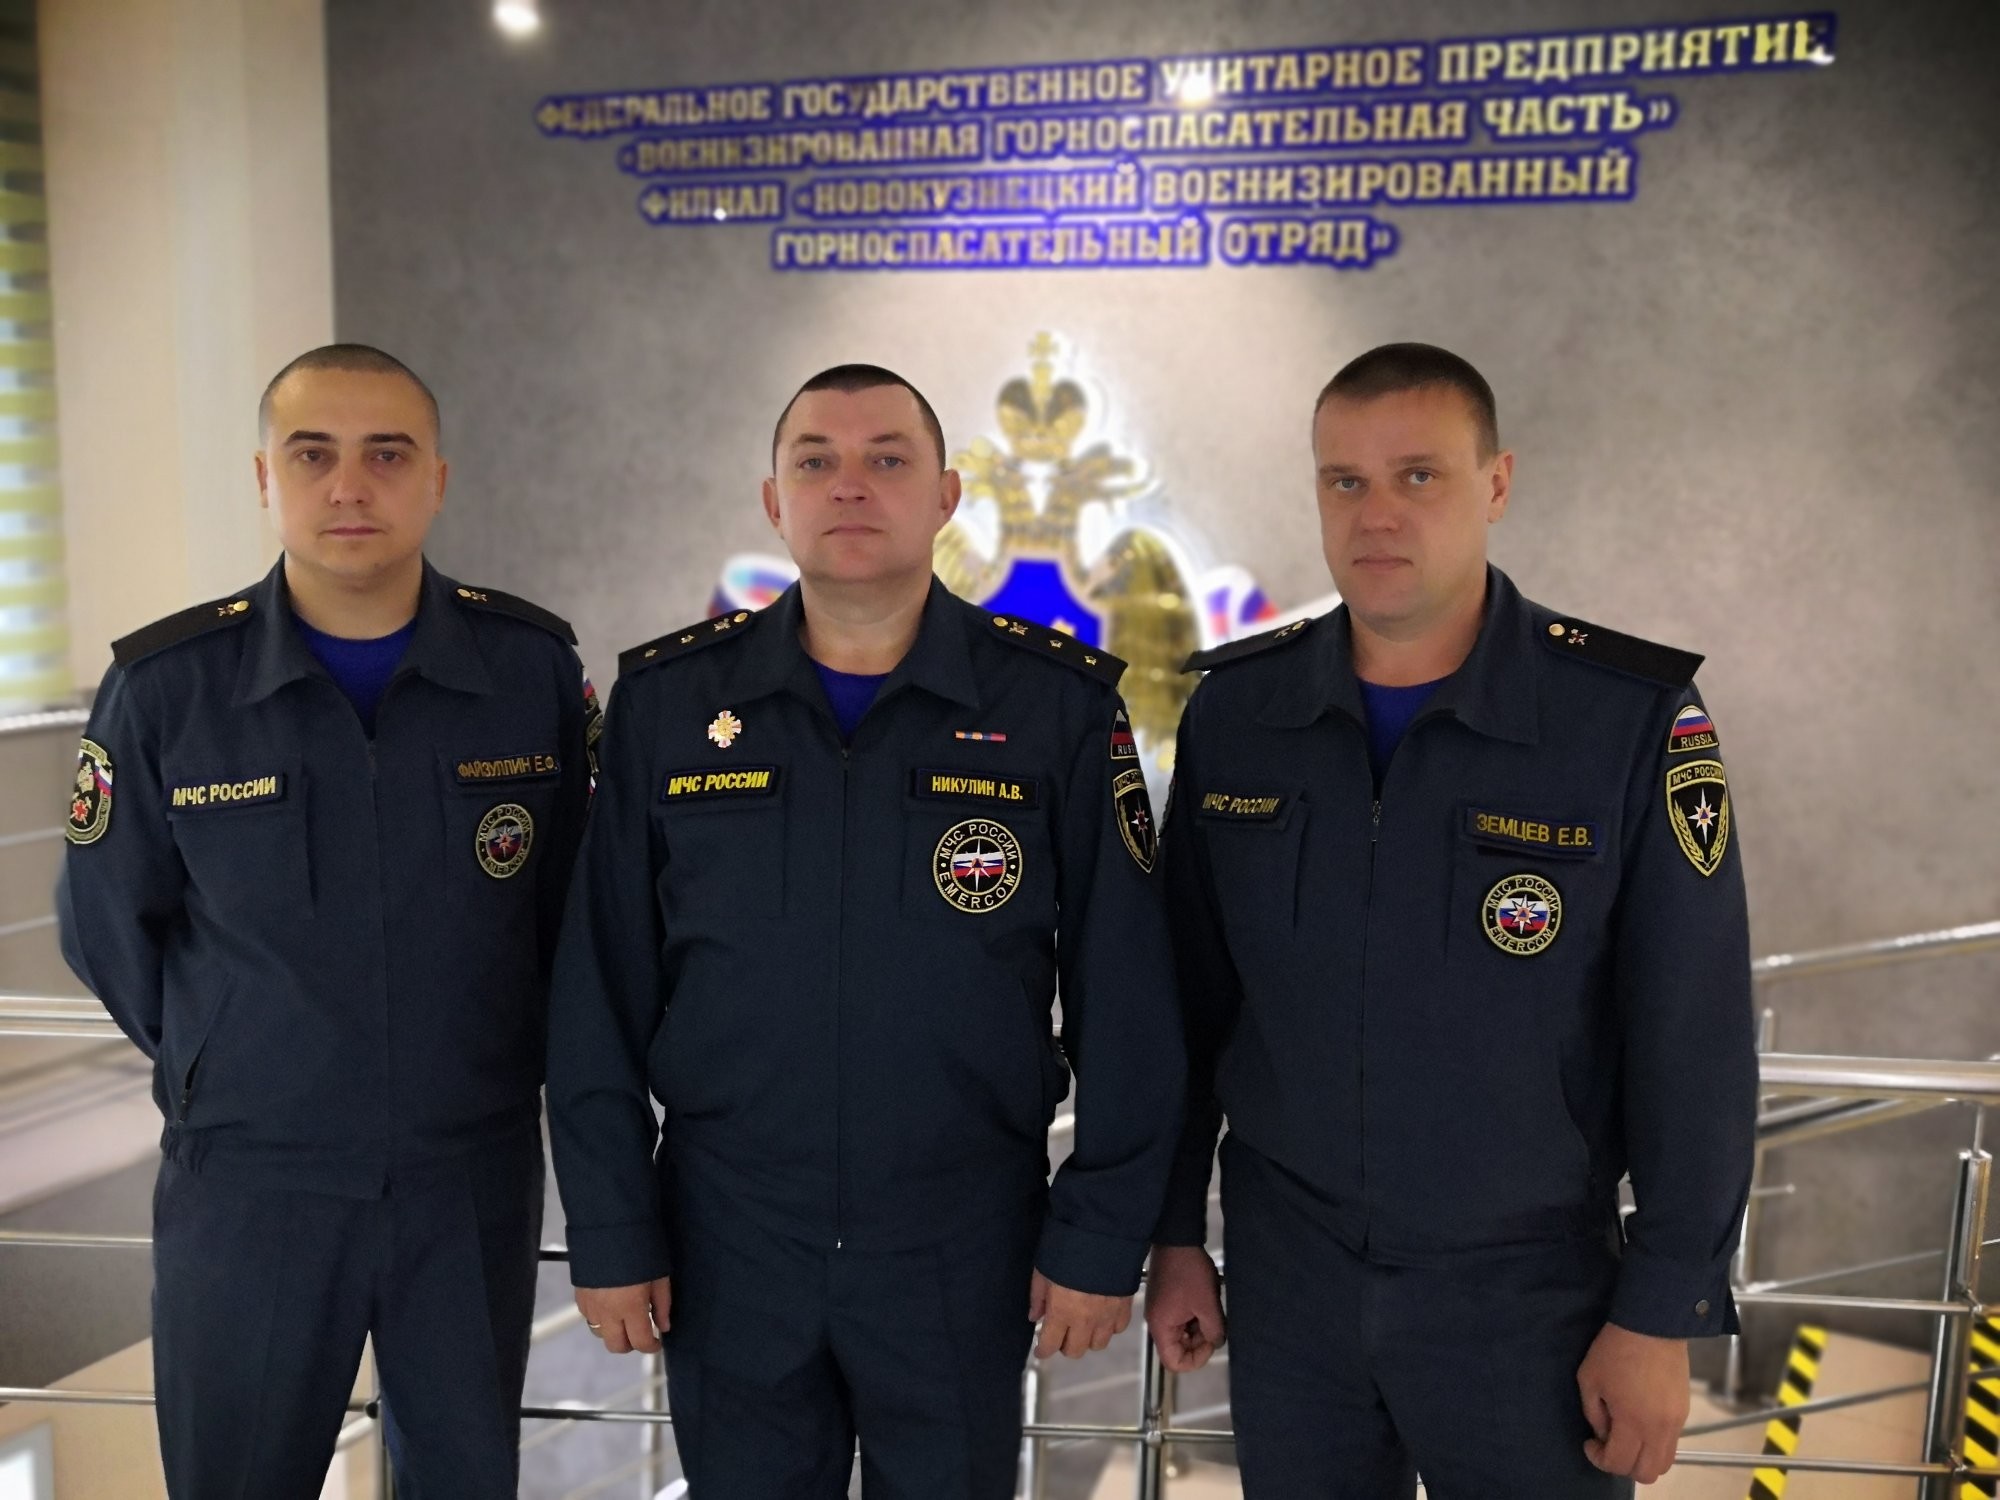 Евгений Файзуллин, Андрей Никулин и Евгений Земцев. Фото © МЧС России
